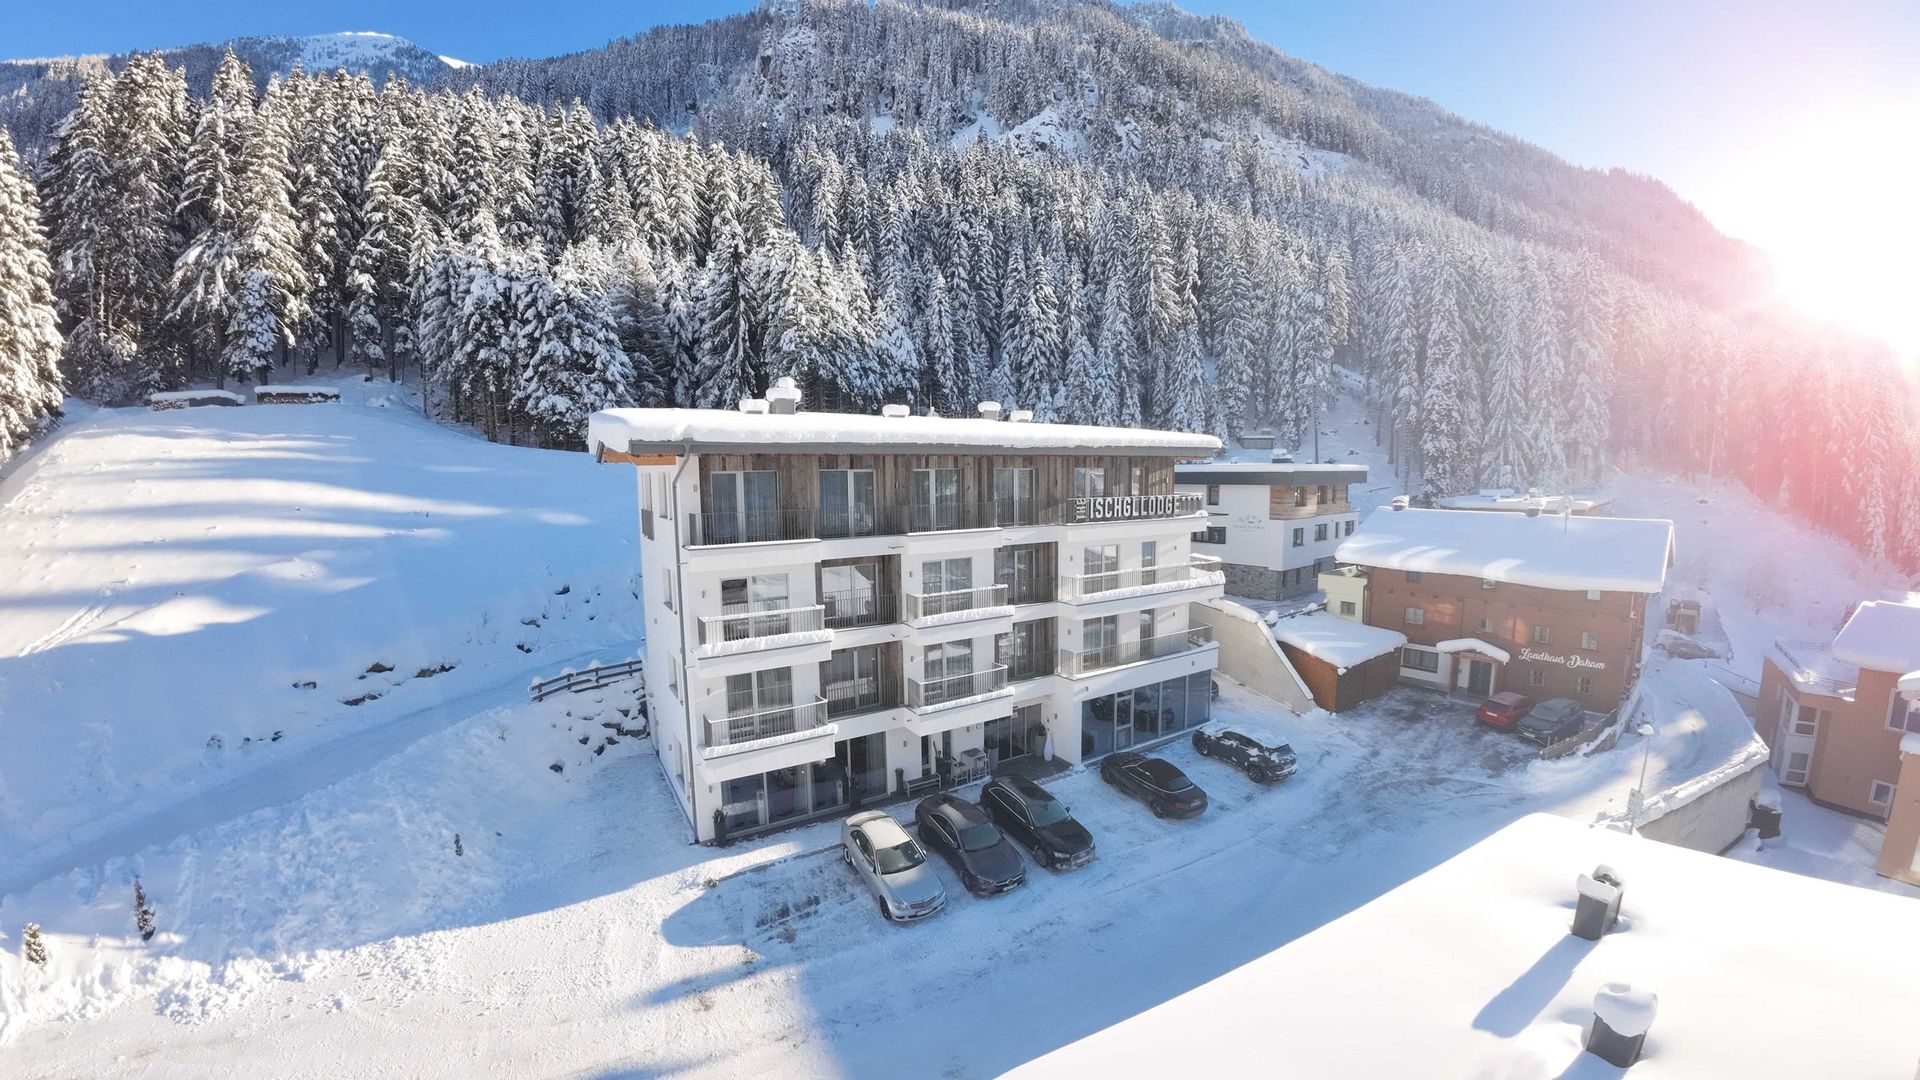 The Ischgl Lodge - Saint Anton am Arlberg